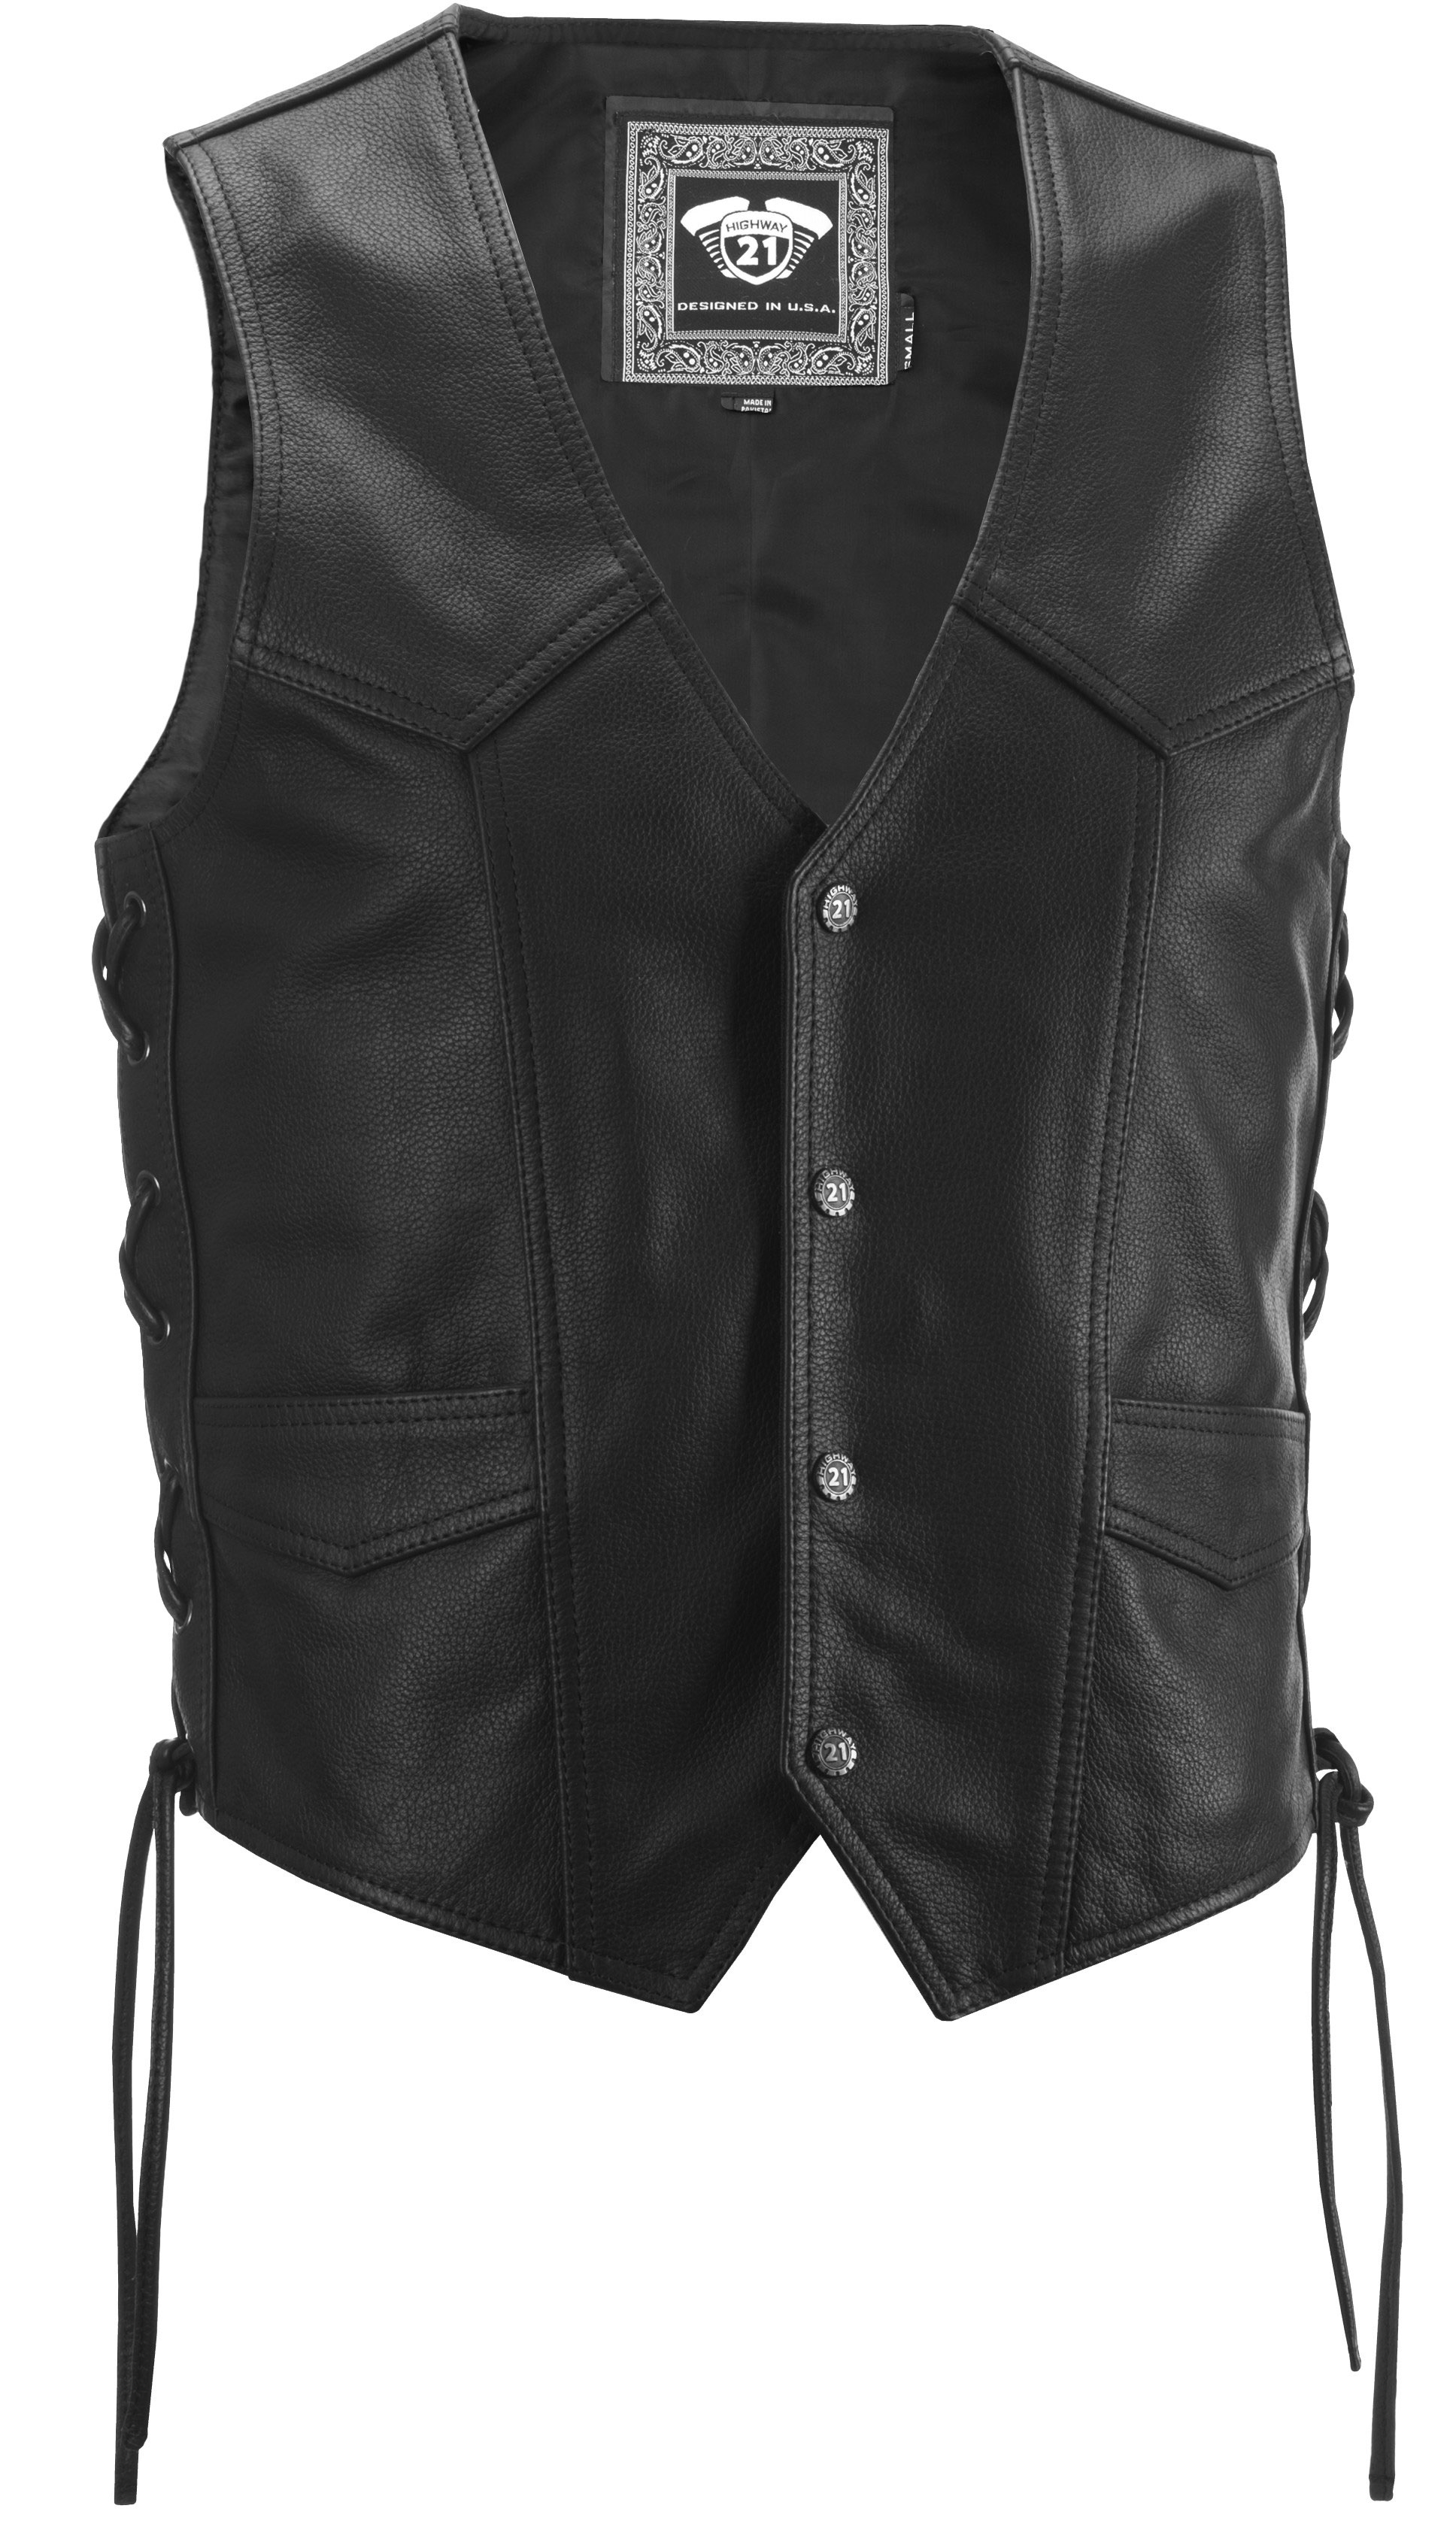 HIGHWAY 21 SIX SHOOTER Leather Vest (Black)-H21 489-1070-1P